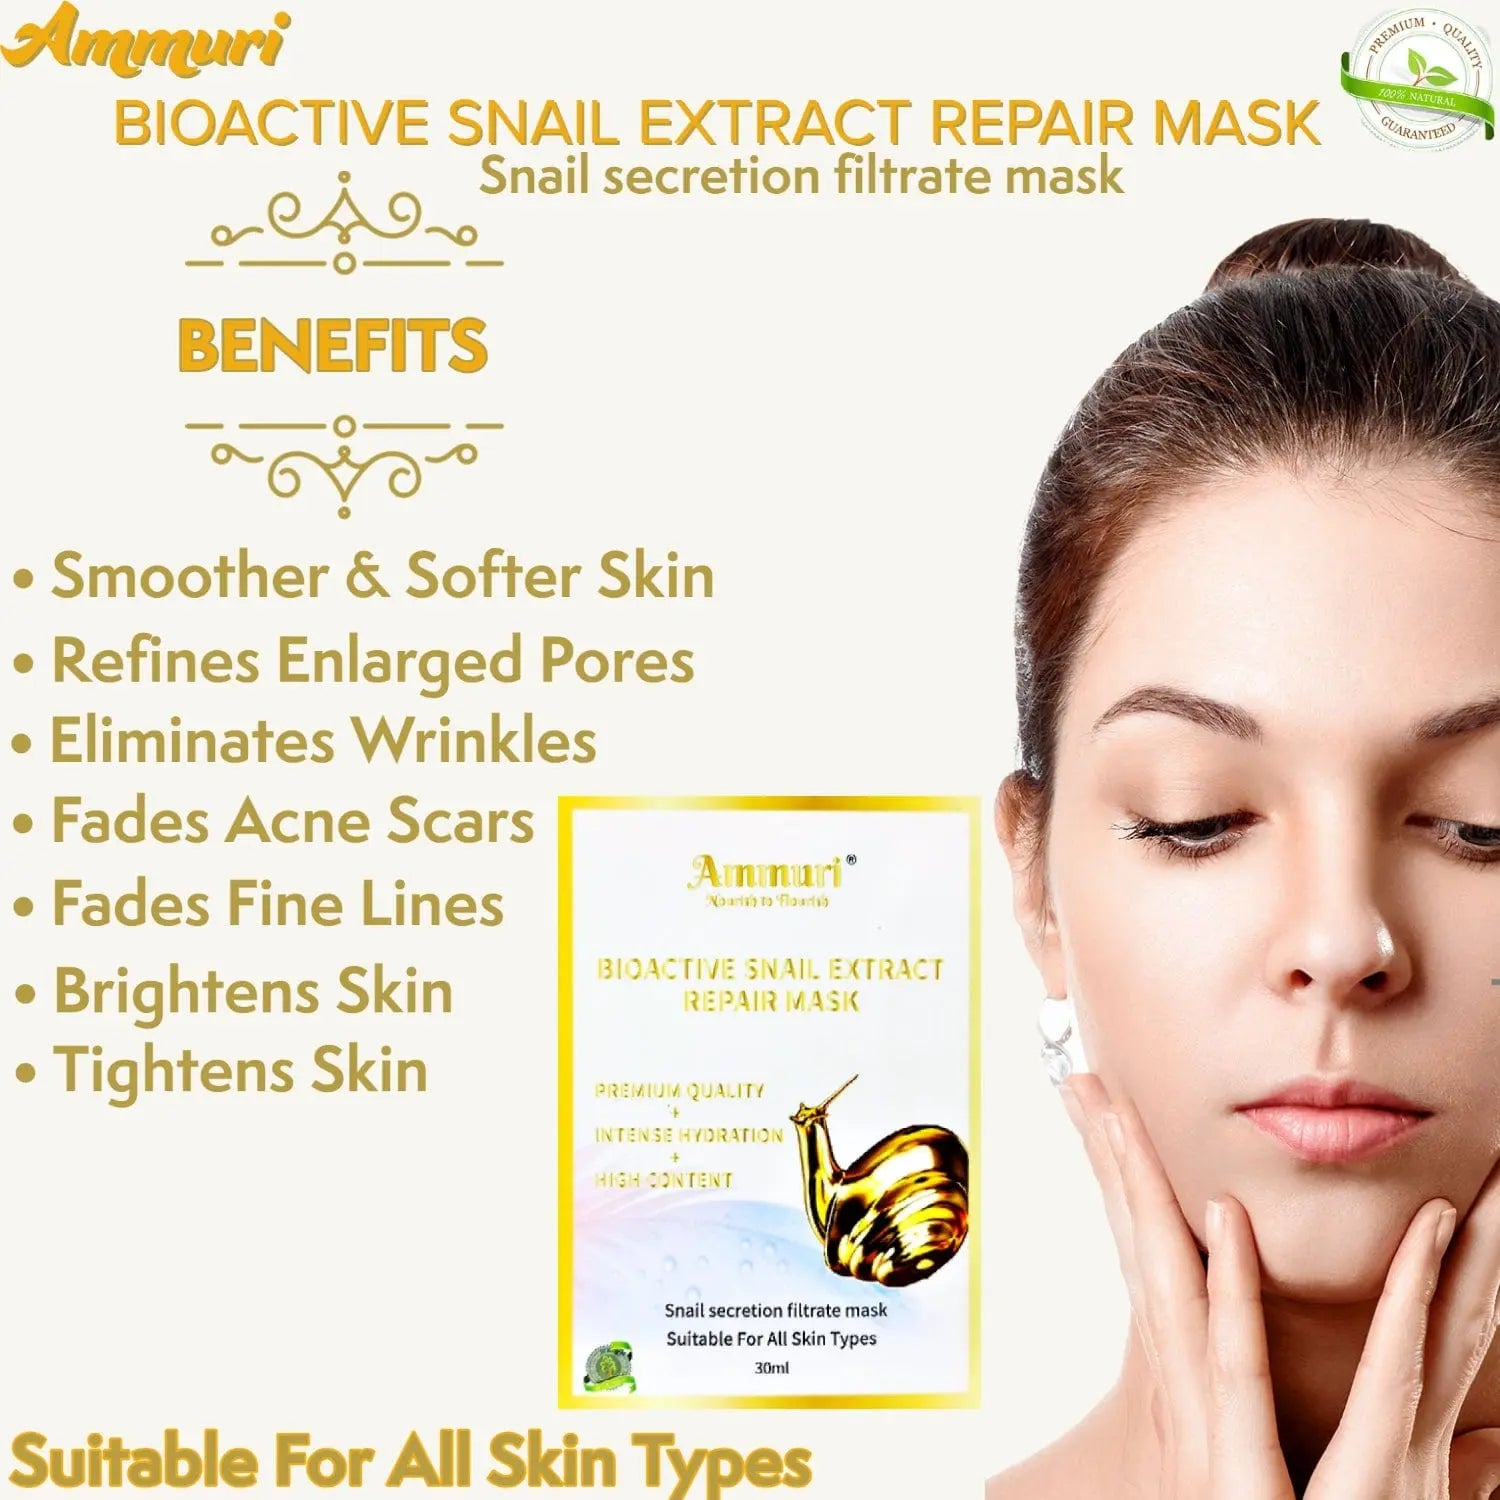 Ammuri BIO ACTIVE SNAIL EXTRACT SILK FACE MASK SHEETS Anti Wrinkle Anti Aging Snail secretion Ammuri Skincare